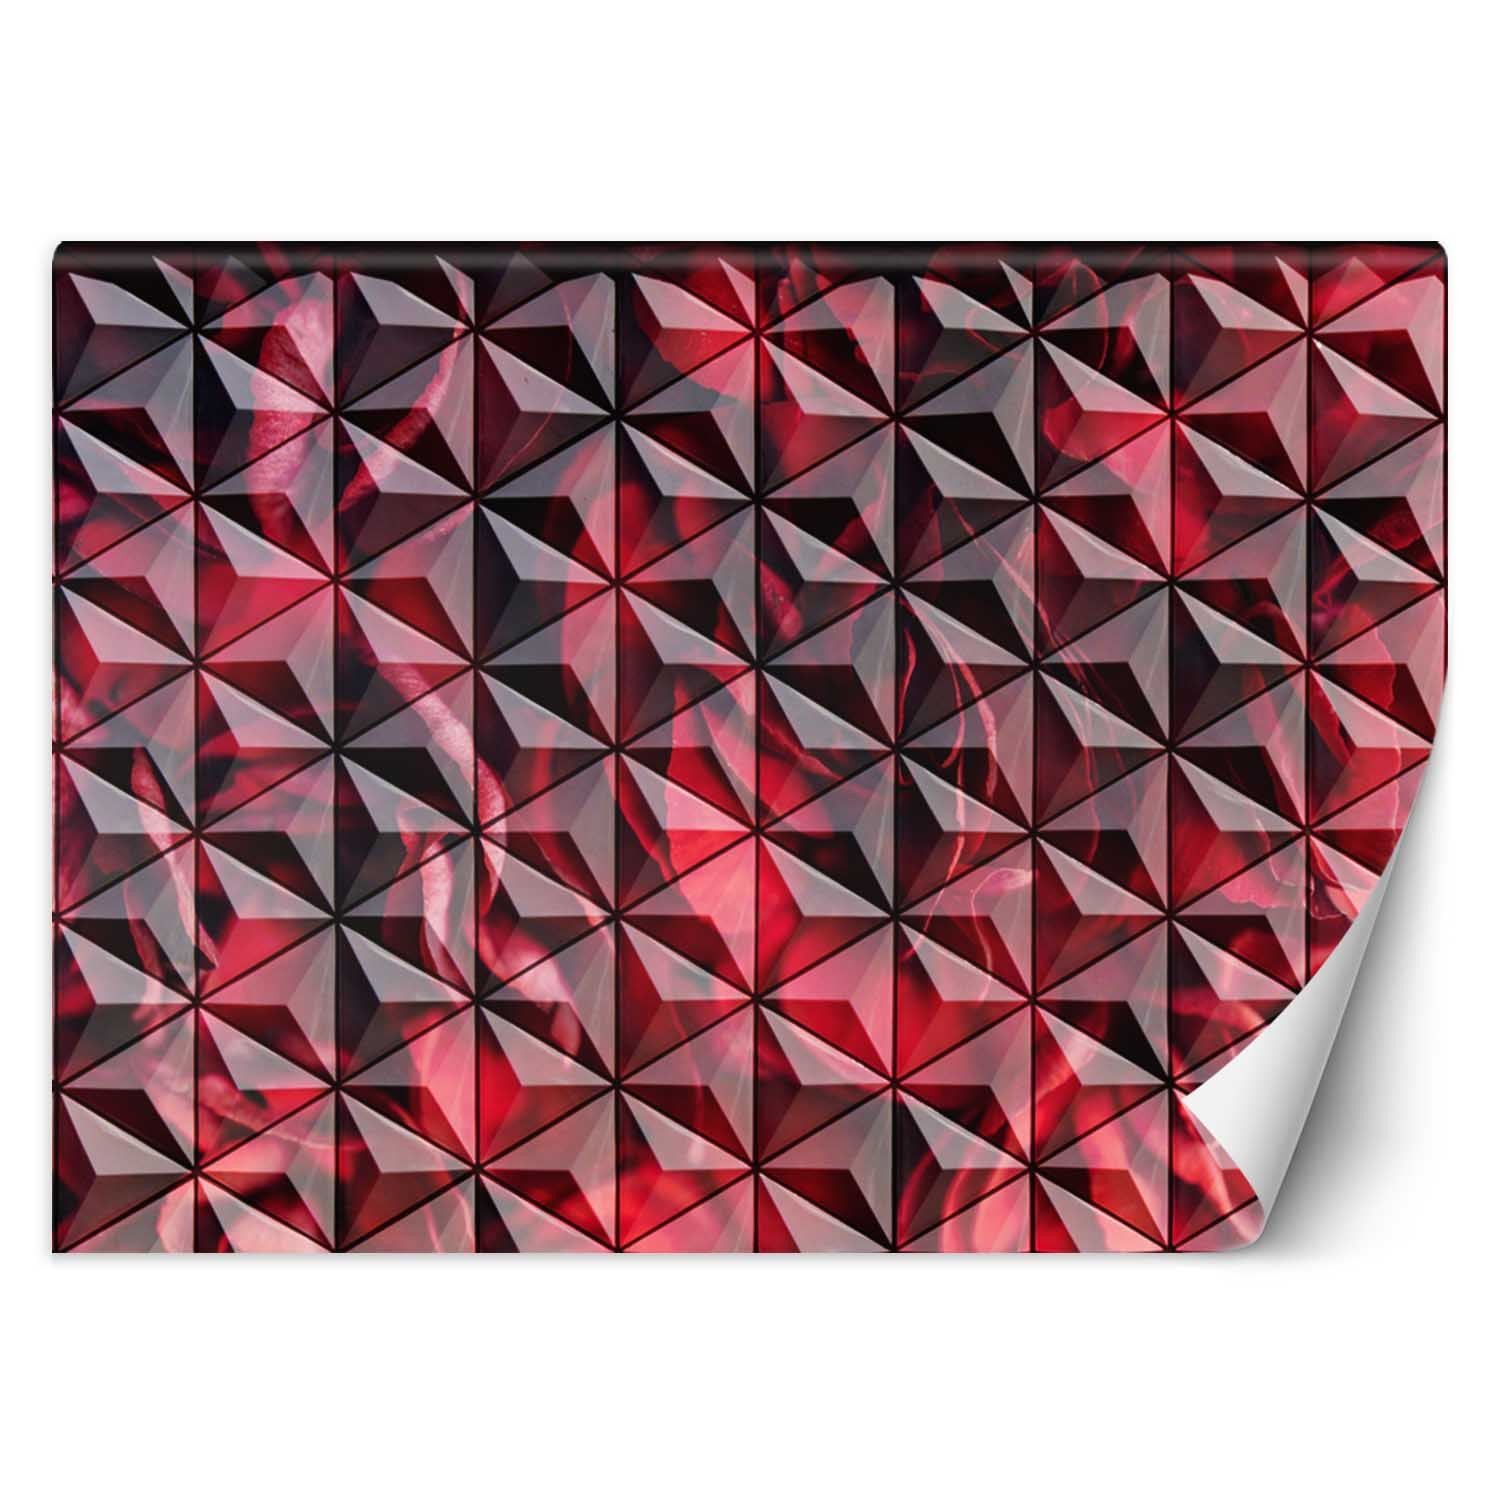 Trend24 – Behang – Rode Geometrie – Vliesbehang – Behang Woonkamer – Fotobehang – 450x315x2 cm – Incl. behanglijm